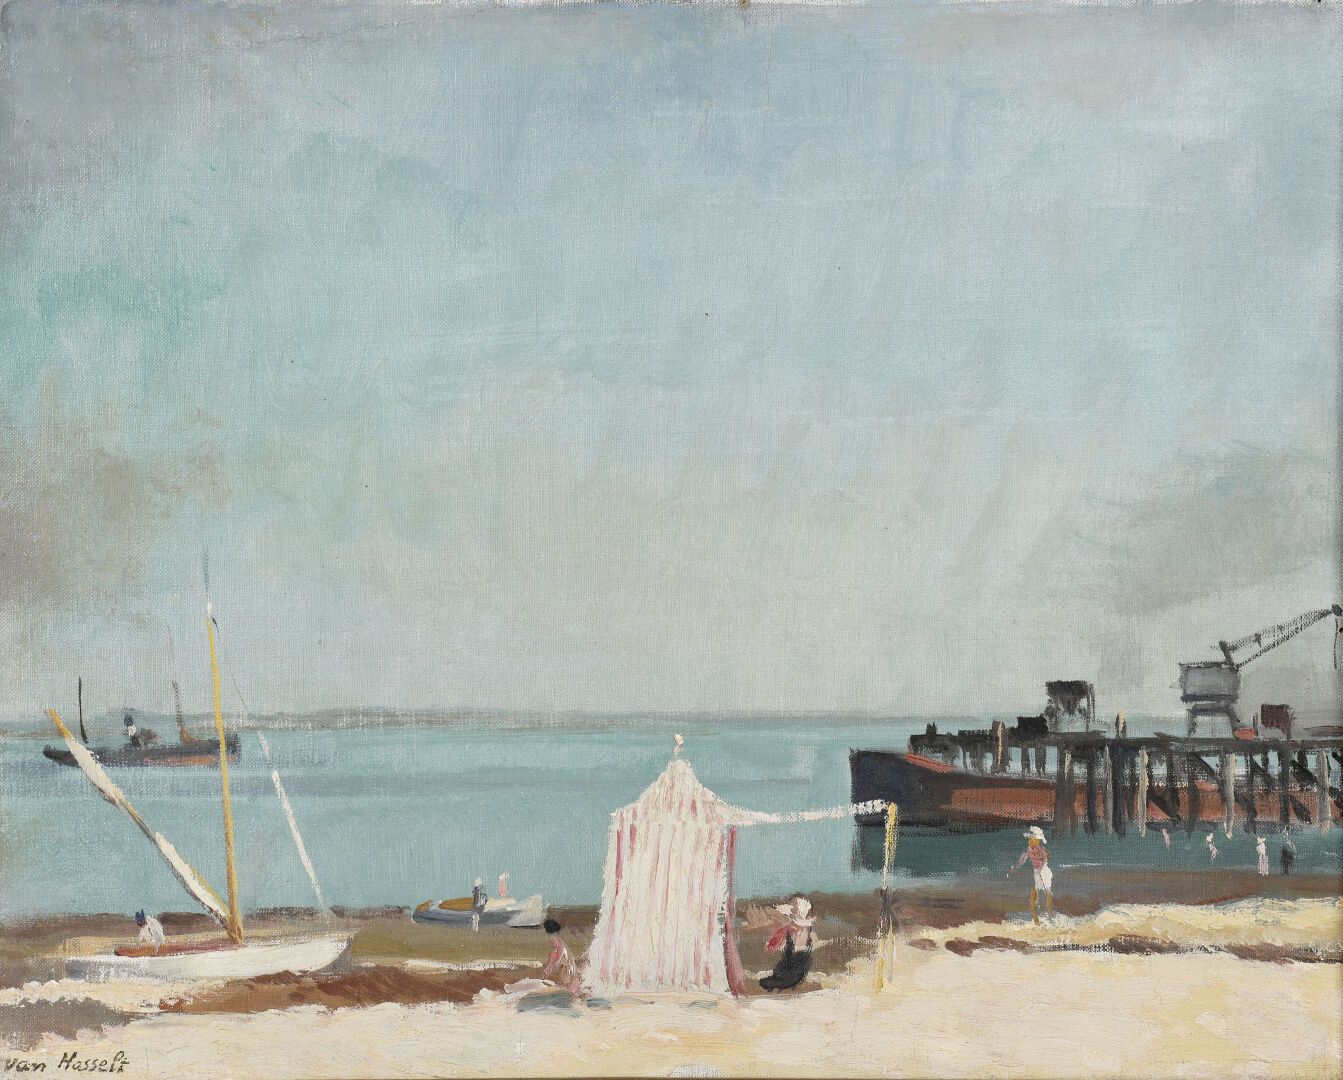 Null Willem VAN HASSELT (1882-1963)
Bord de mer 
Huile sur toile, signée en bas &hellip;